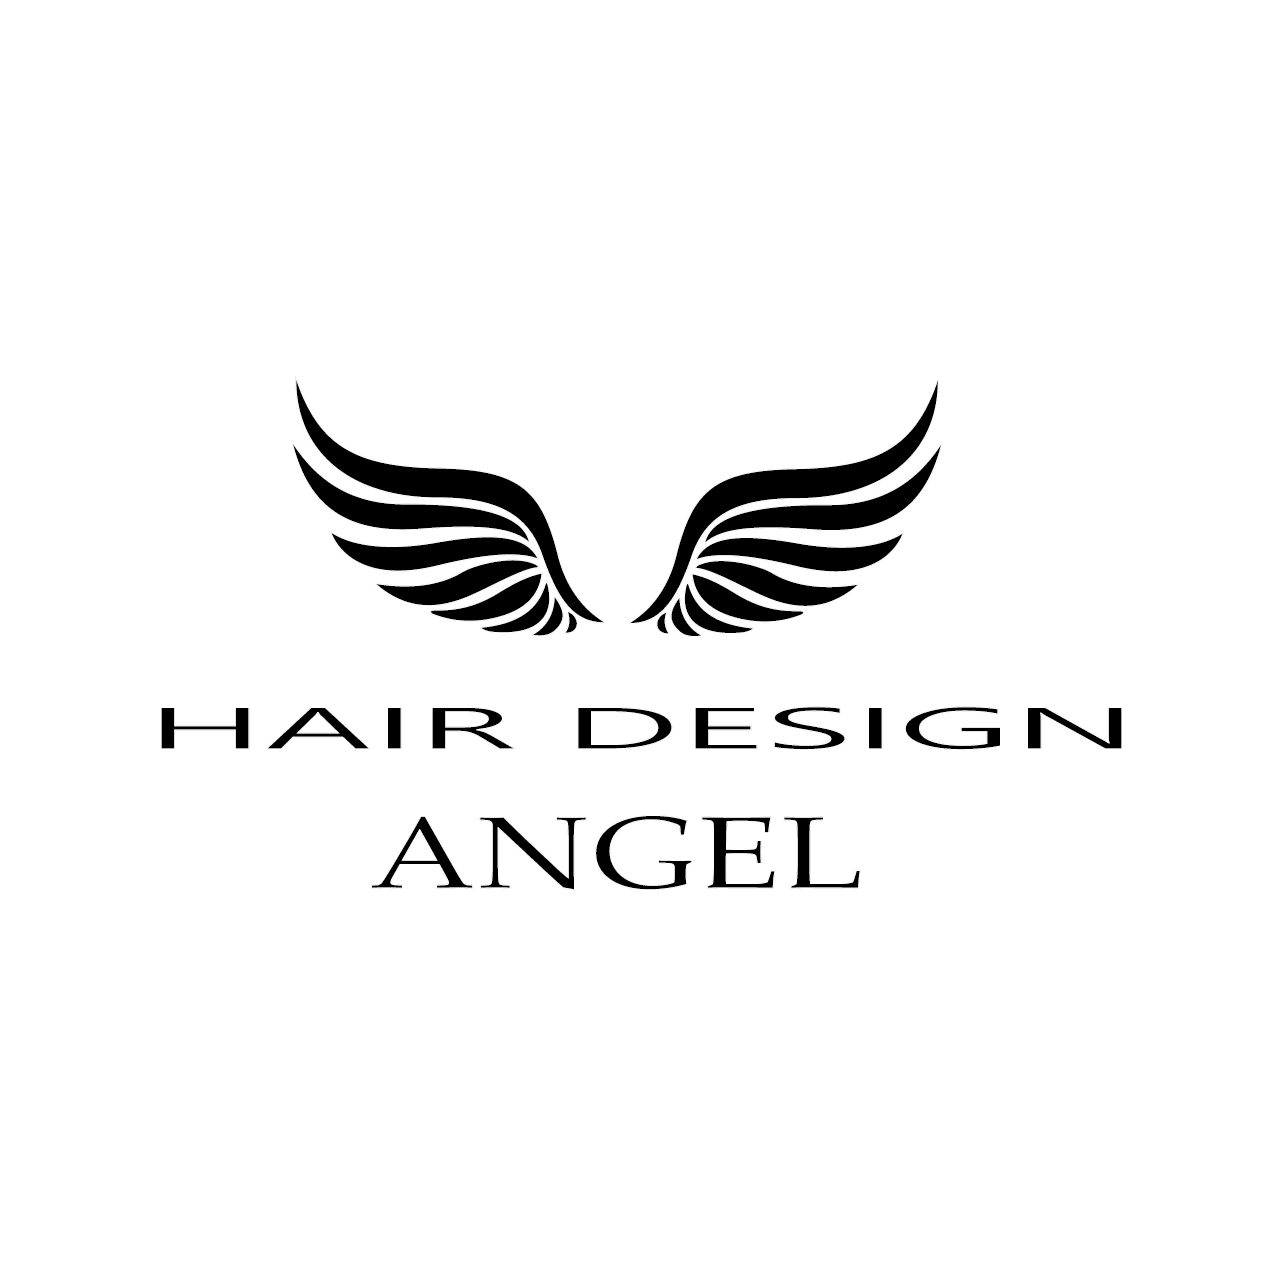 Hair Design Angel Logo